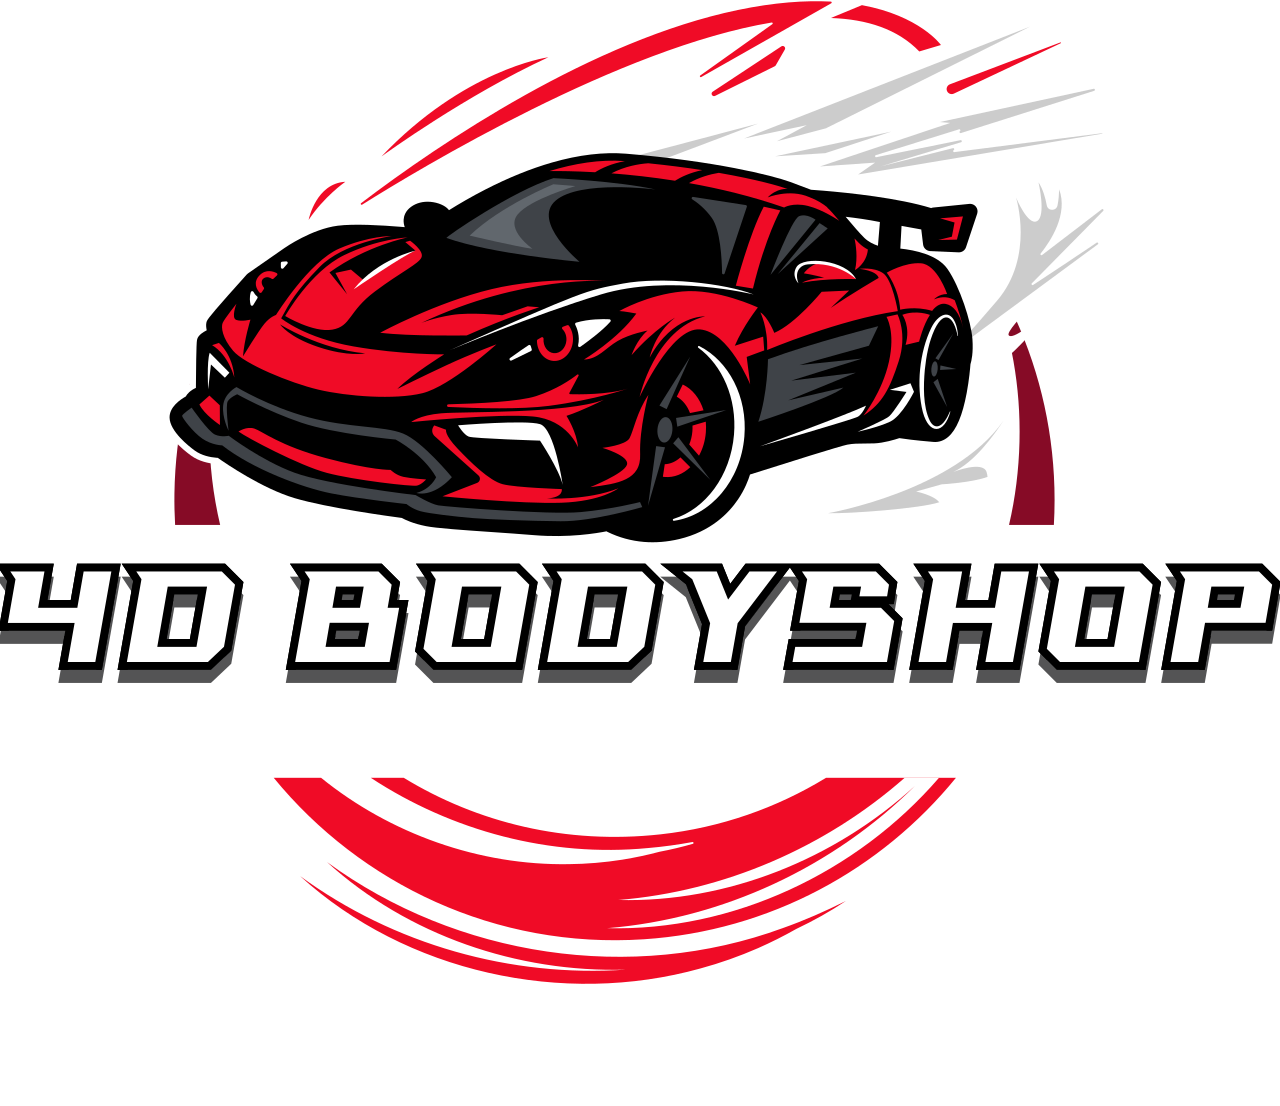 4D Bodyshop's logo